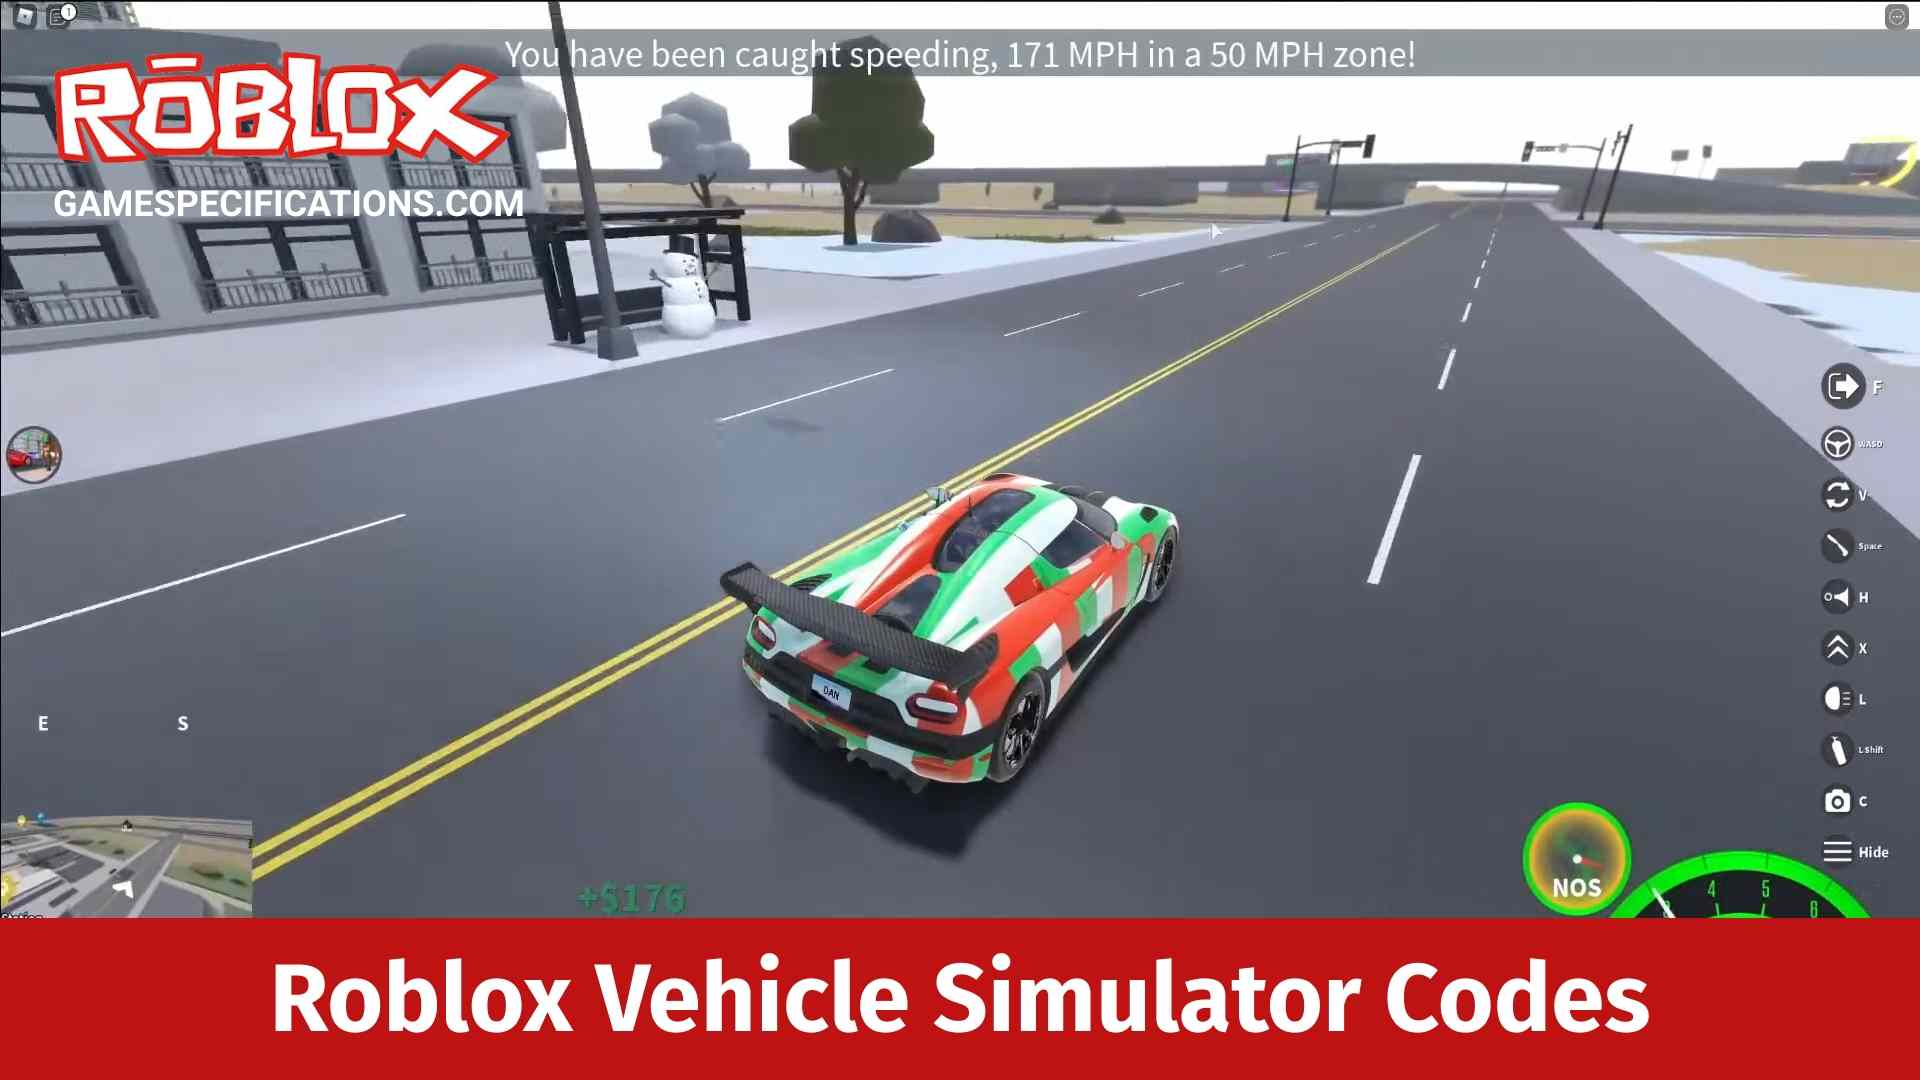 Roblox Vehicle Simulator Codes July 2021 Game Specifications - roblox simulator vehicule codes